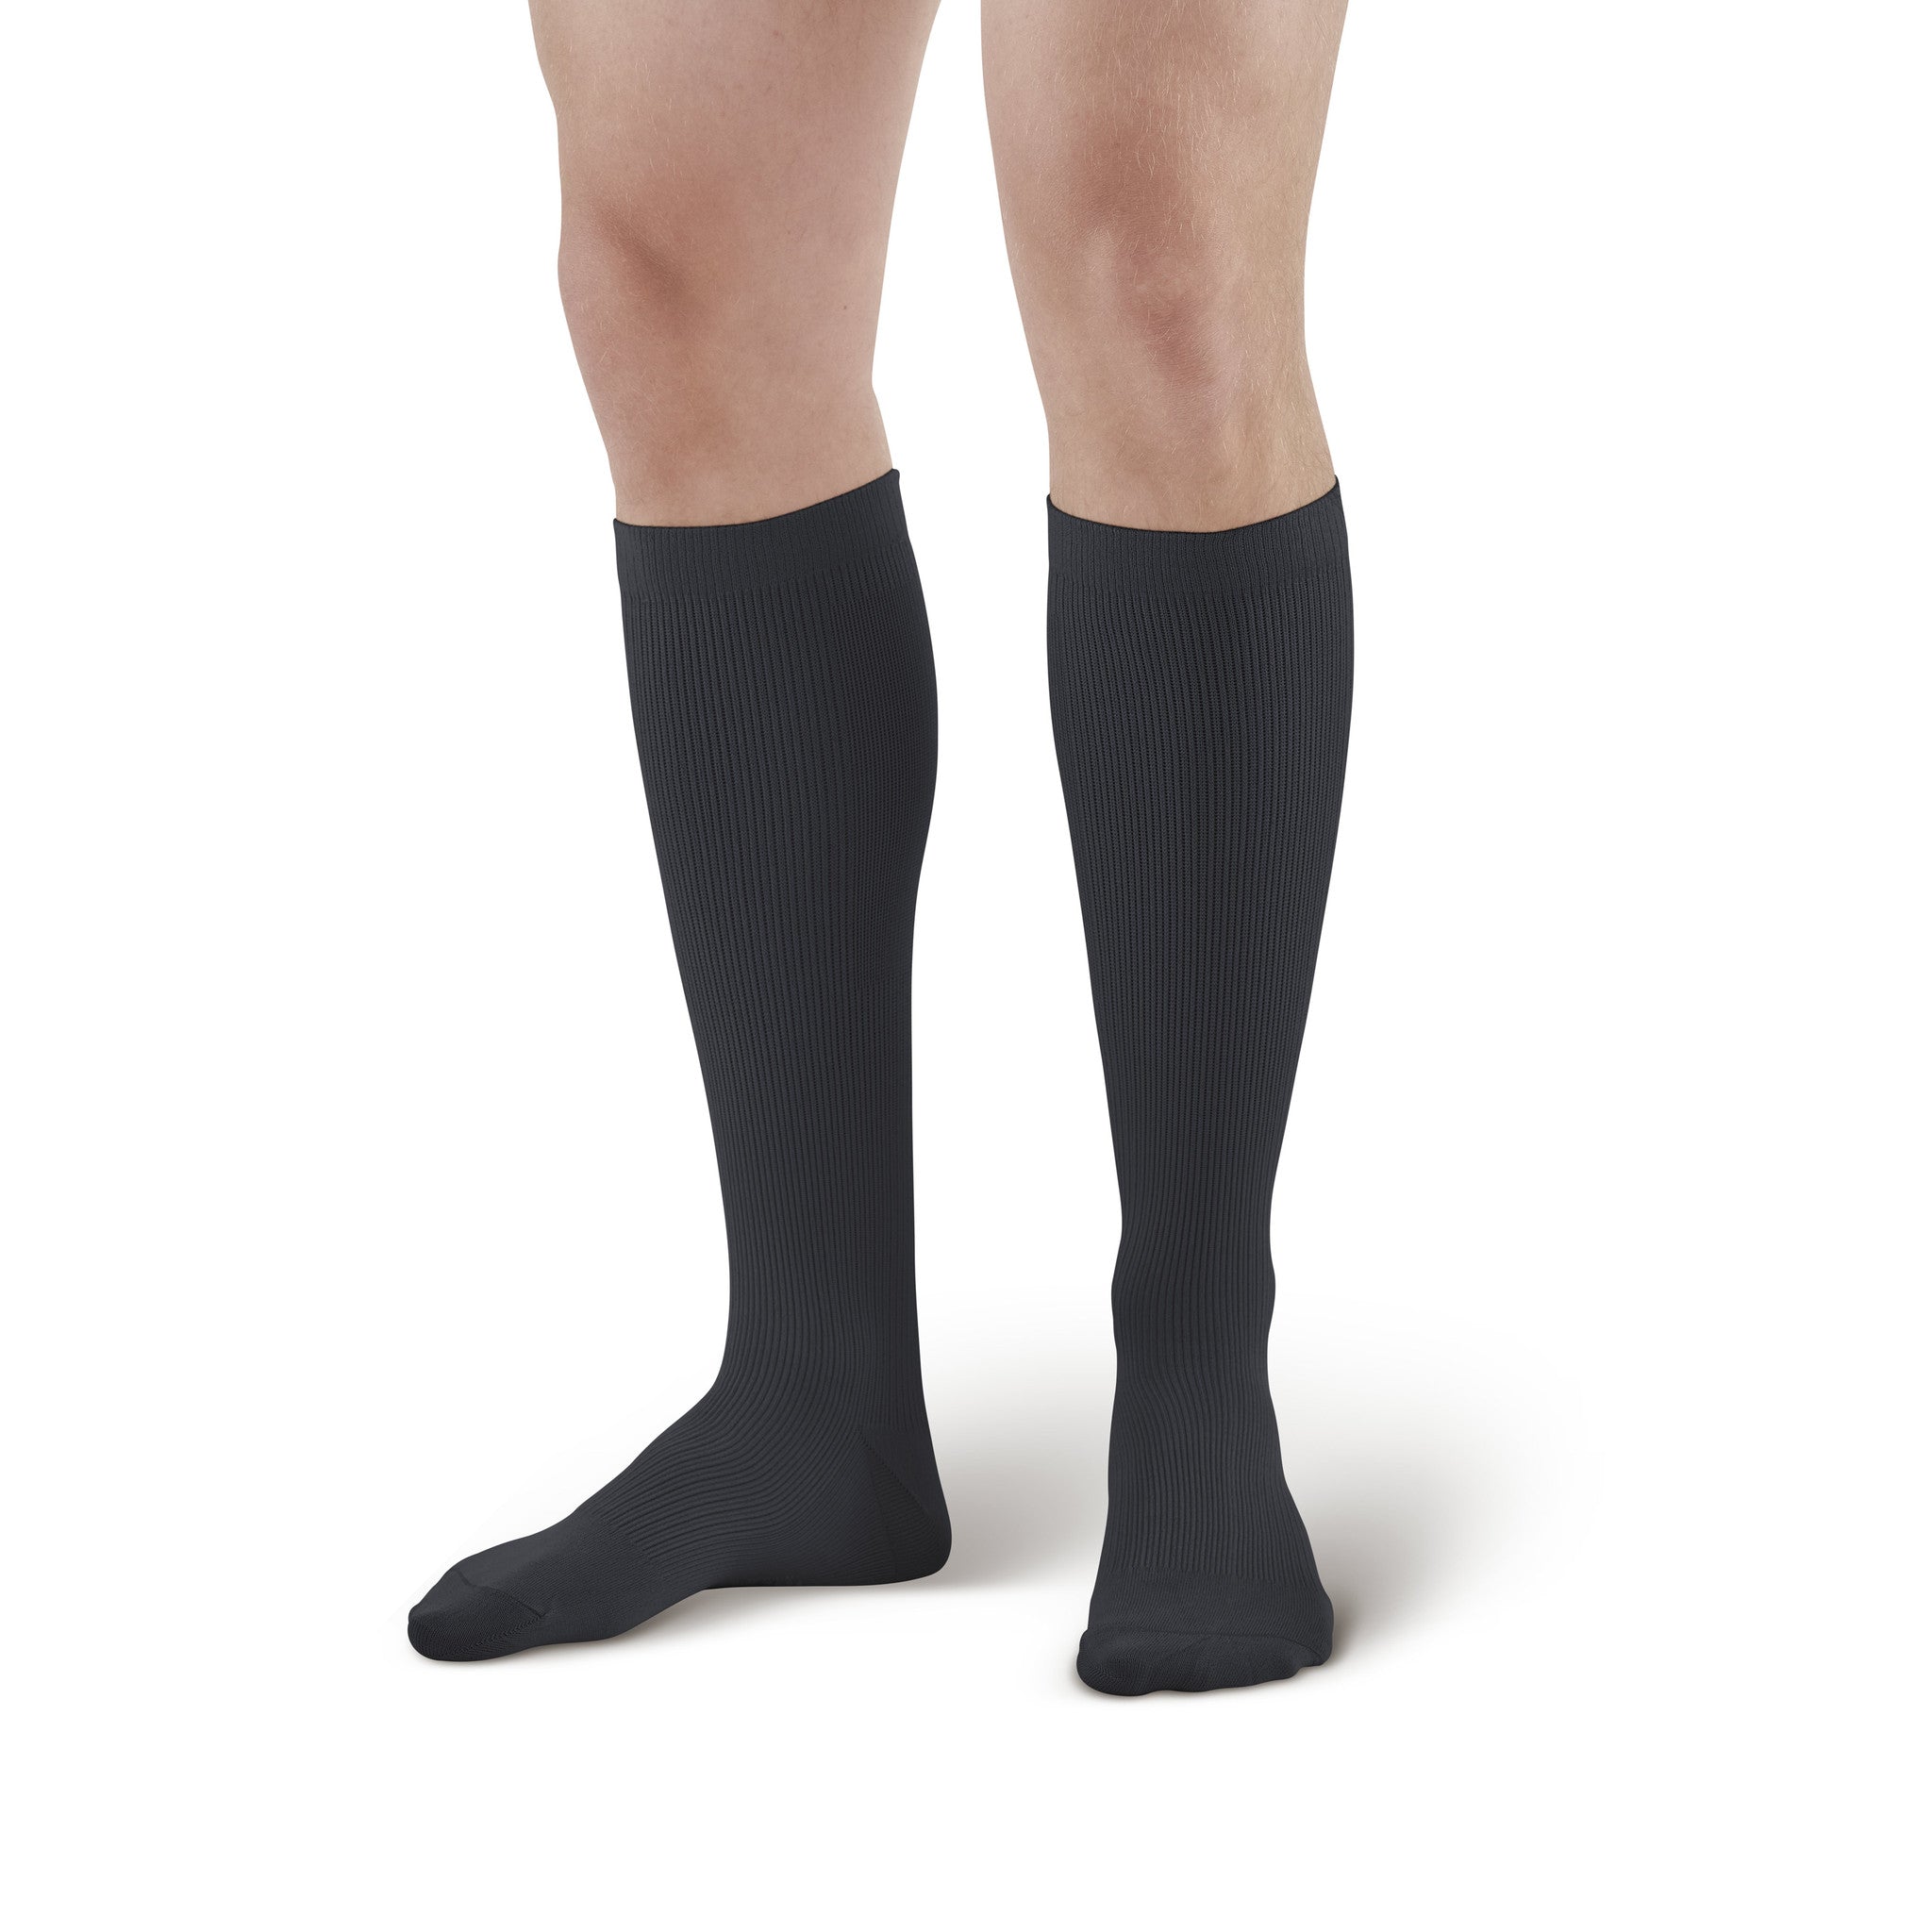 Ames Walker Men's Compression Socks 20-30 mmhg l Low Price Guarantee